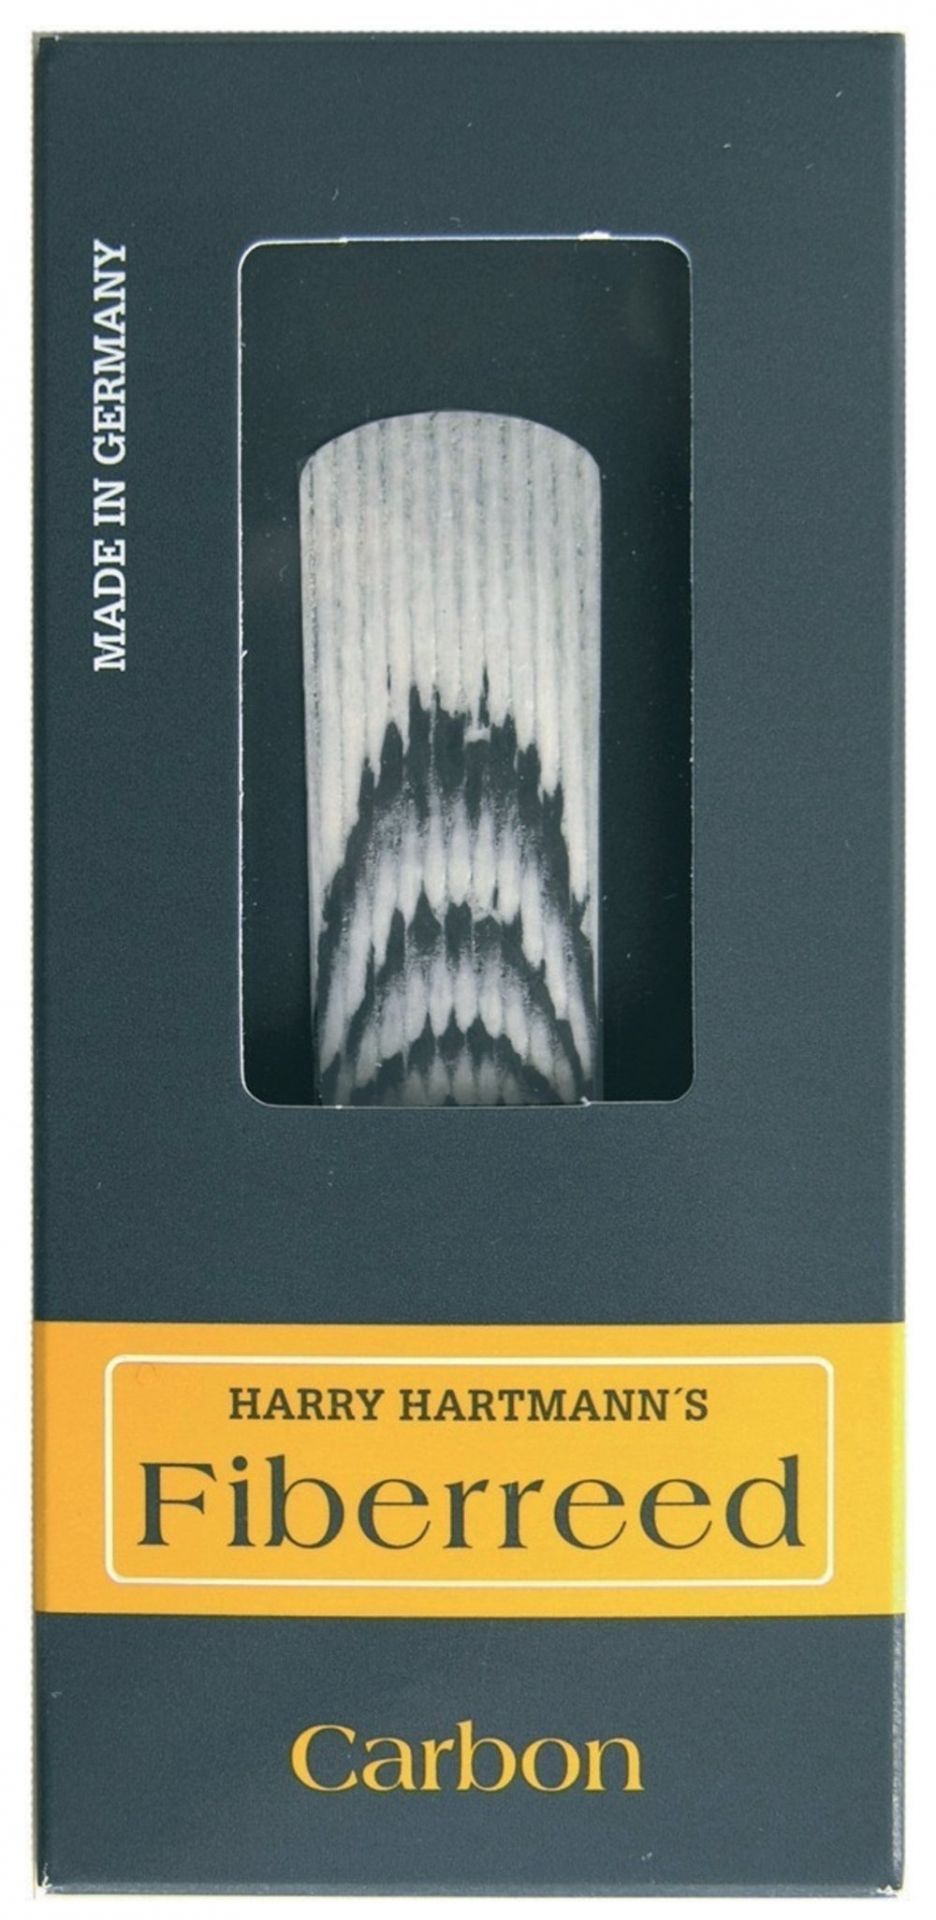 Harry Hartmann's Fiberreed Carbon M